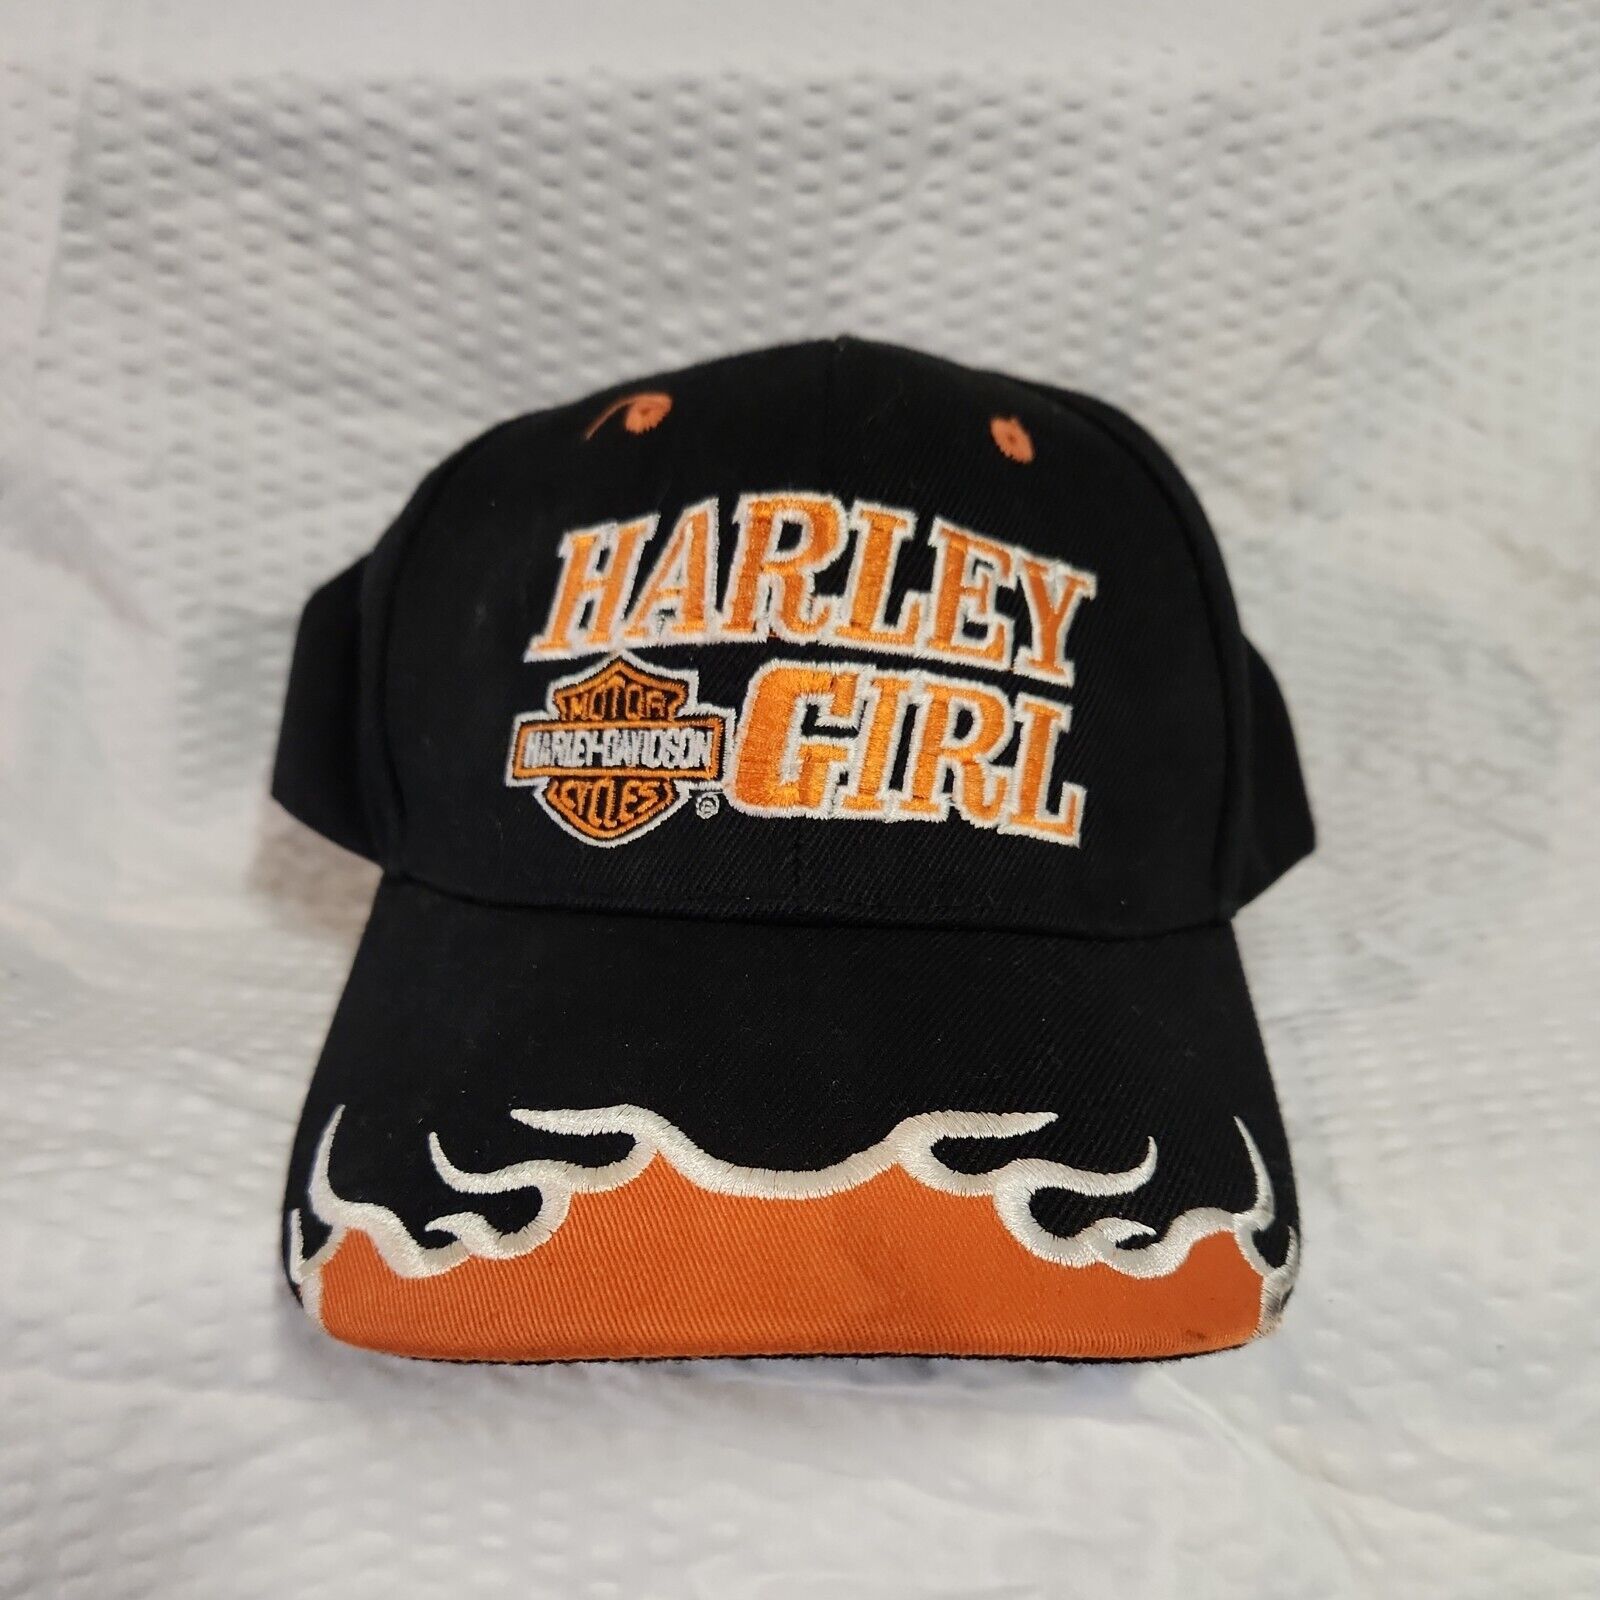 Harley Davidson HARLEY GIRL Motorcycle Ball Cap With Flames. Adjustable